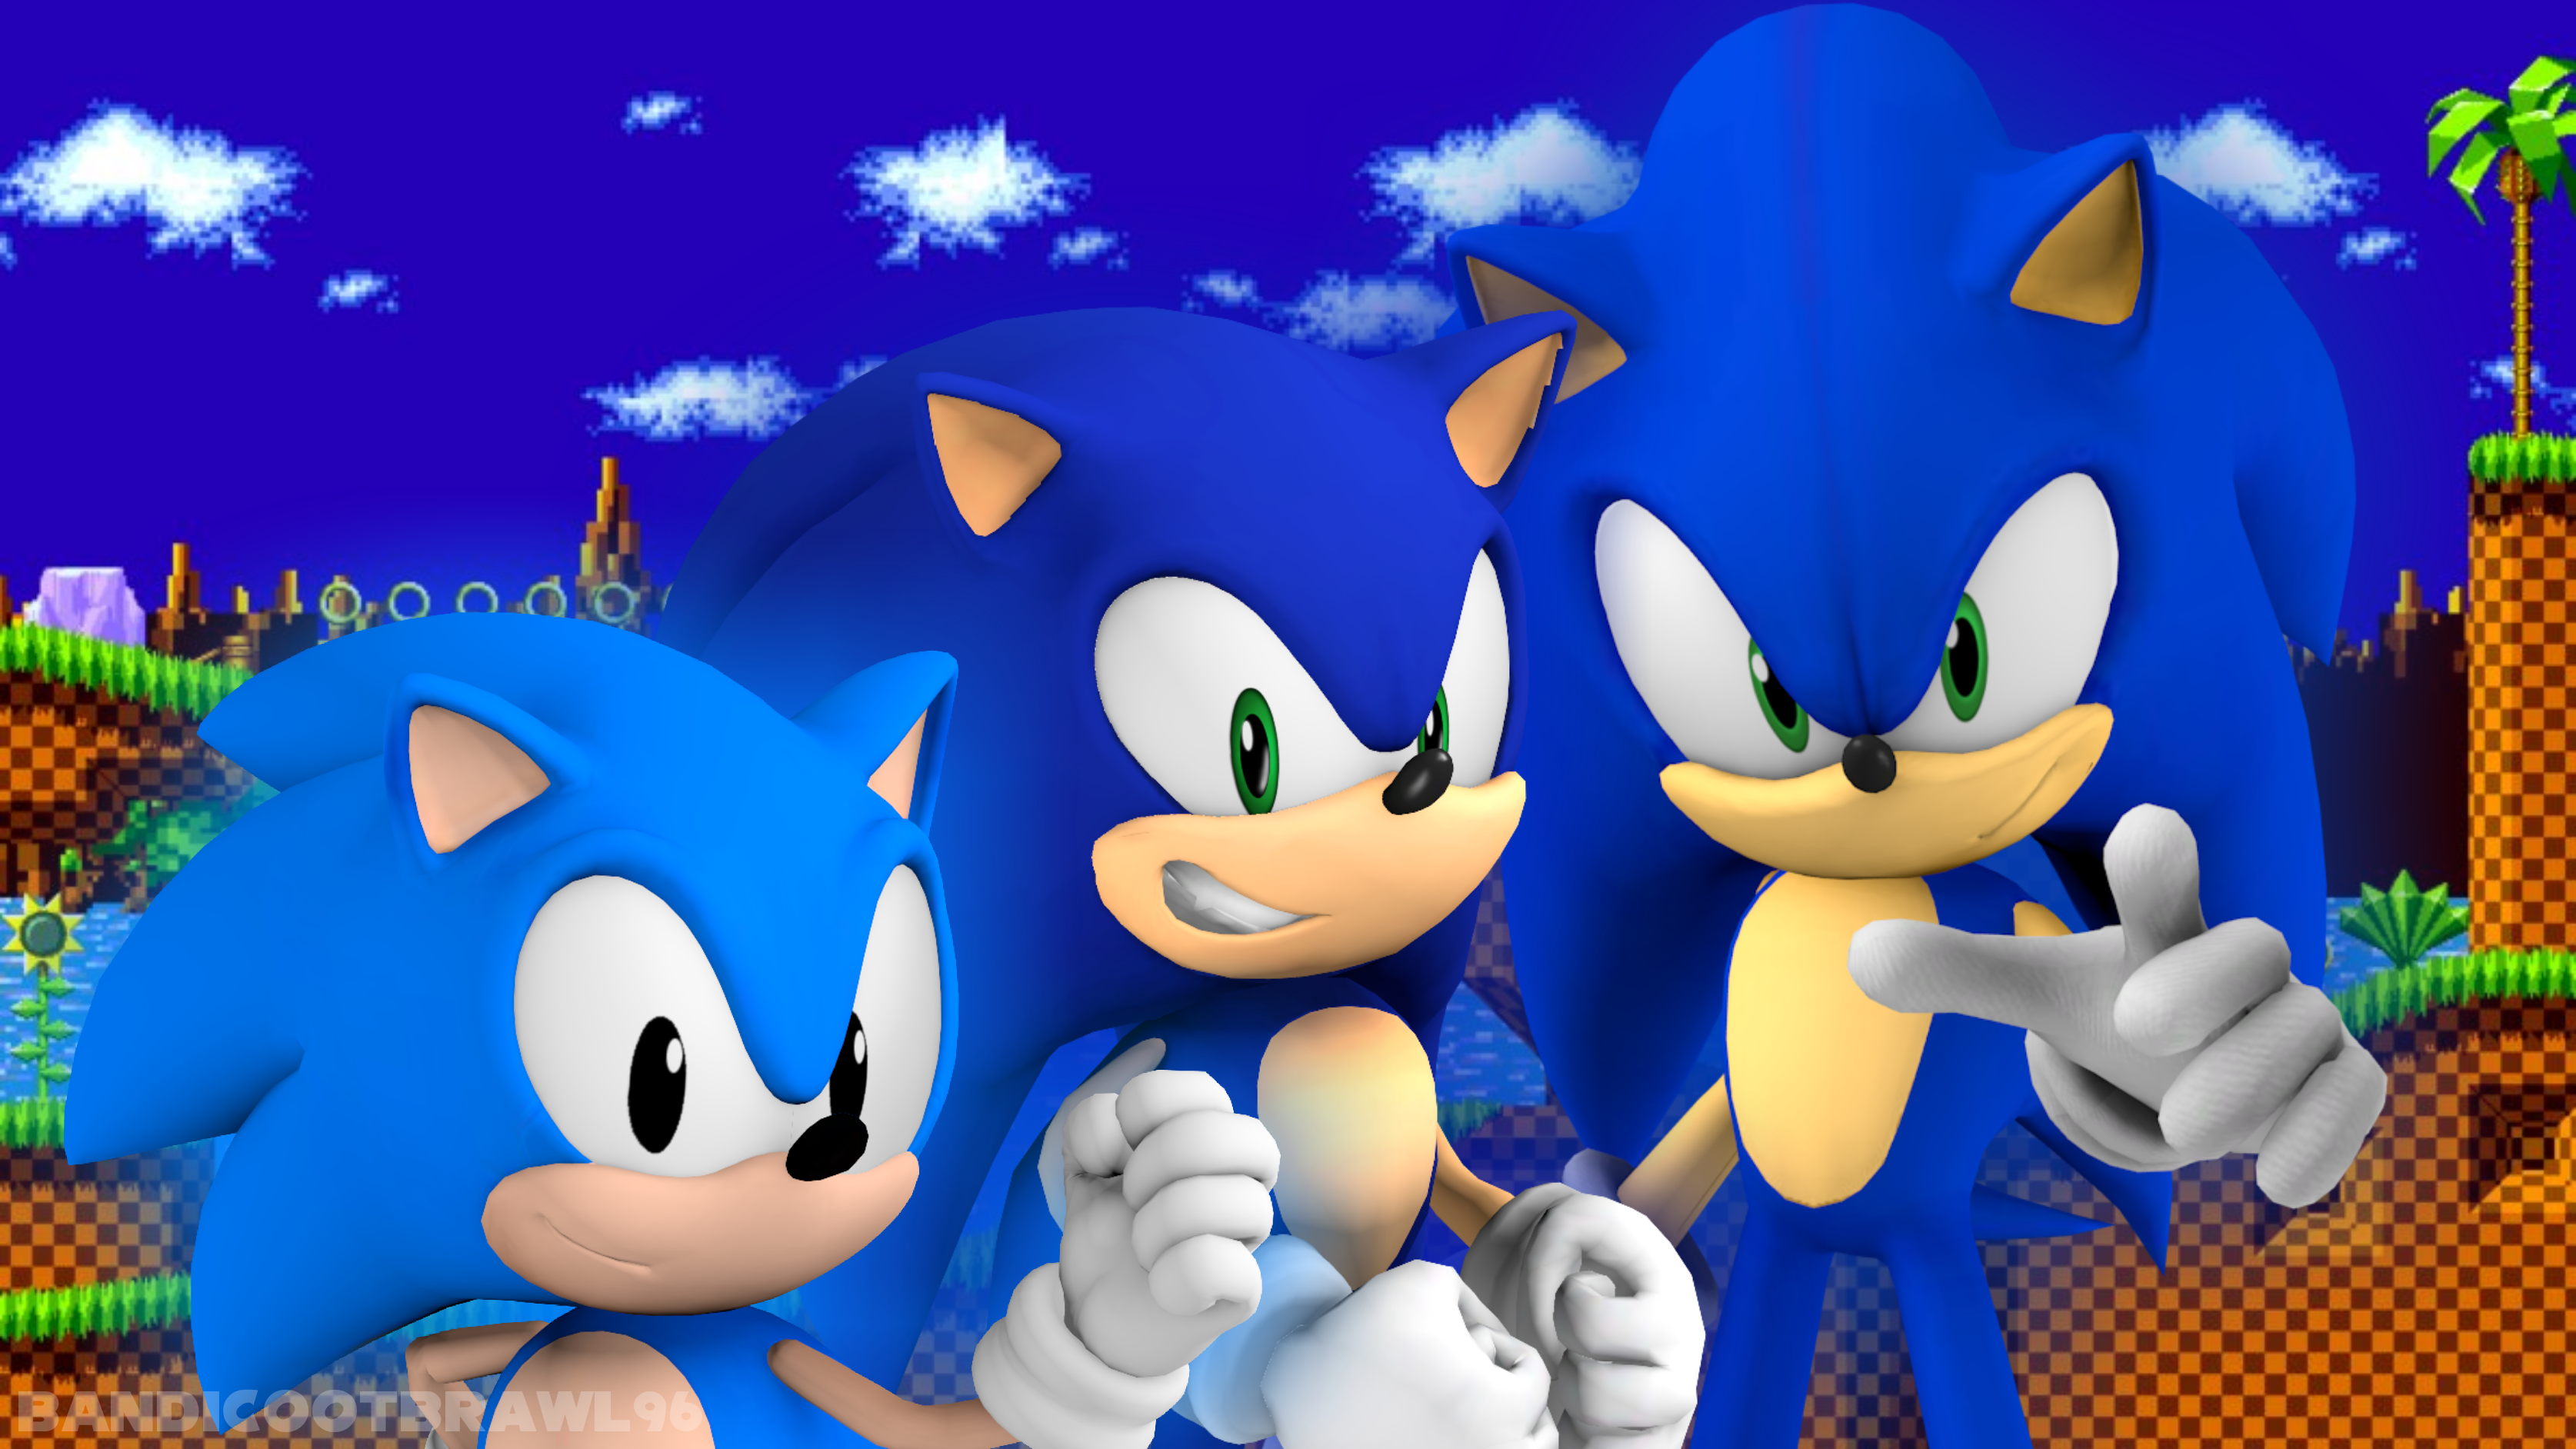 Classic Sonic & Friends met Modern Sonic - Comic Studio